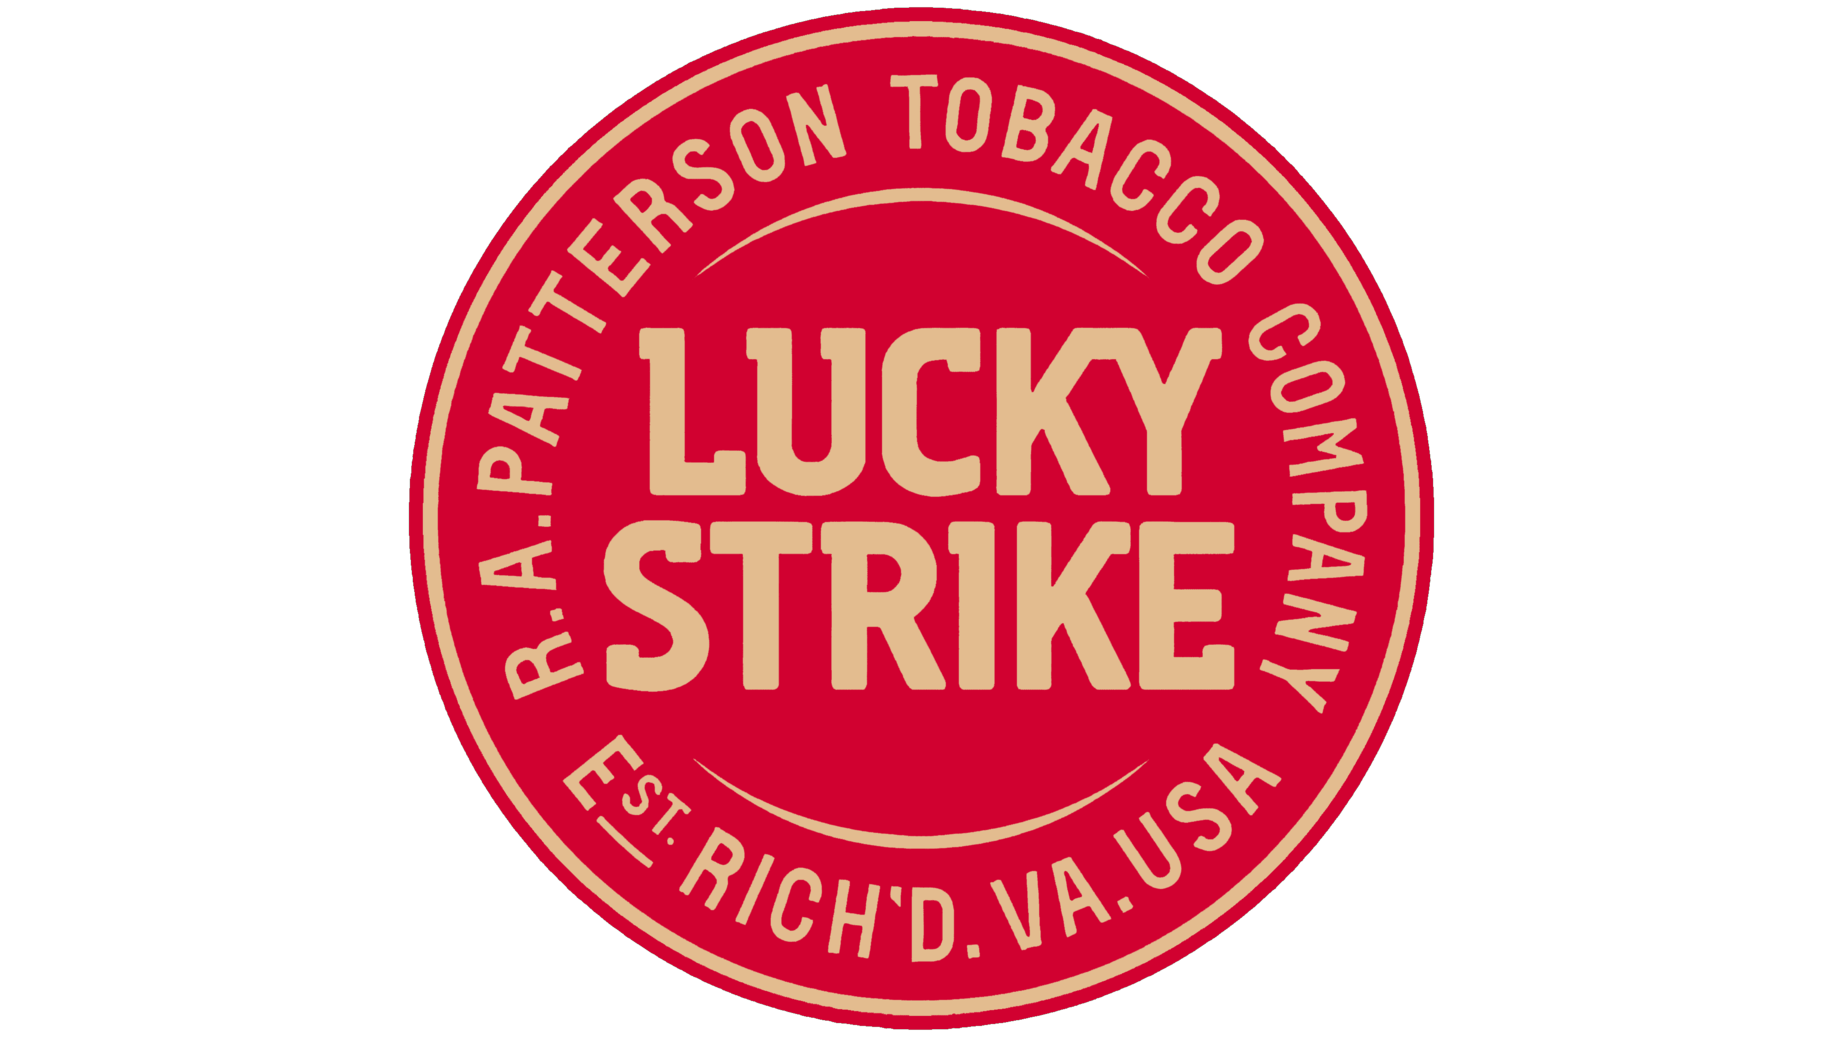 Lucky strike sign